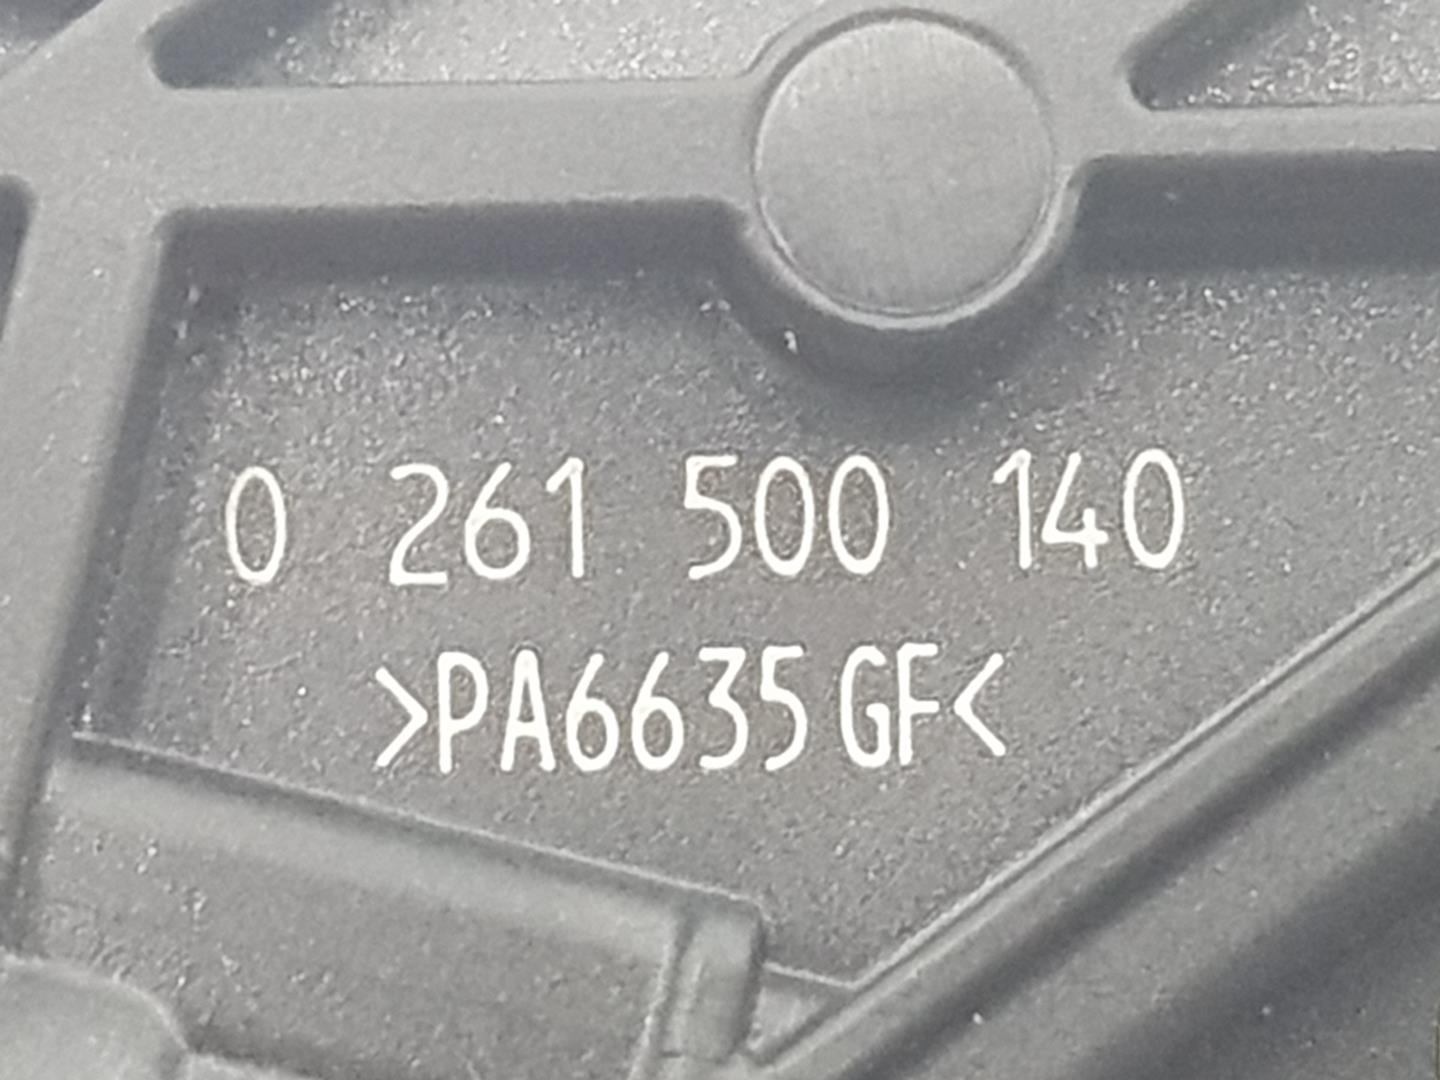 MINI Cooper F56 (2013-2020) Purkštukas (forsunkė) 13537639990, 0261500140, 1212CD2222DL 24153121